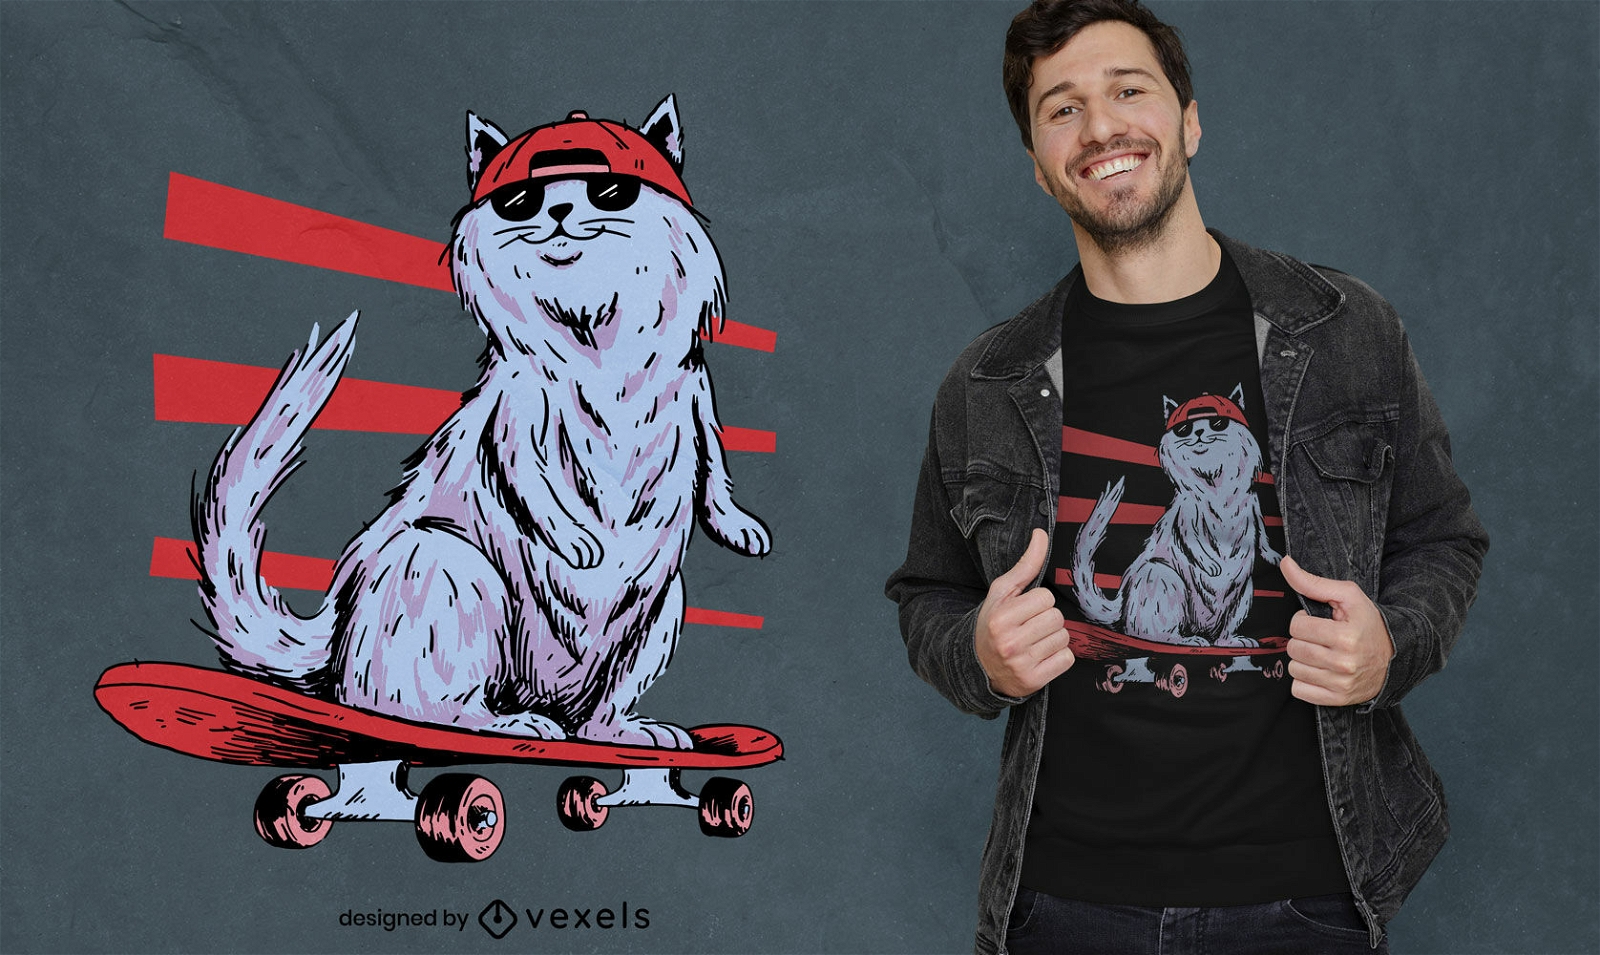 Skateboard T-shirt Design Vector Download